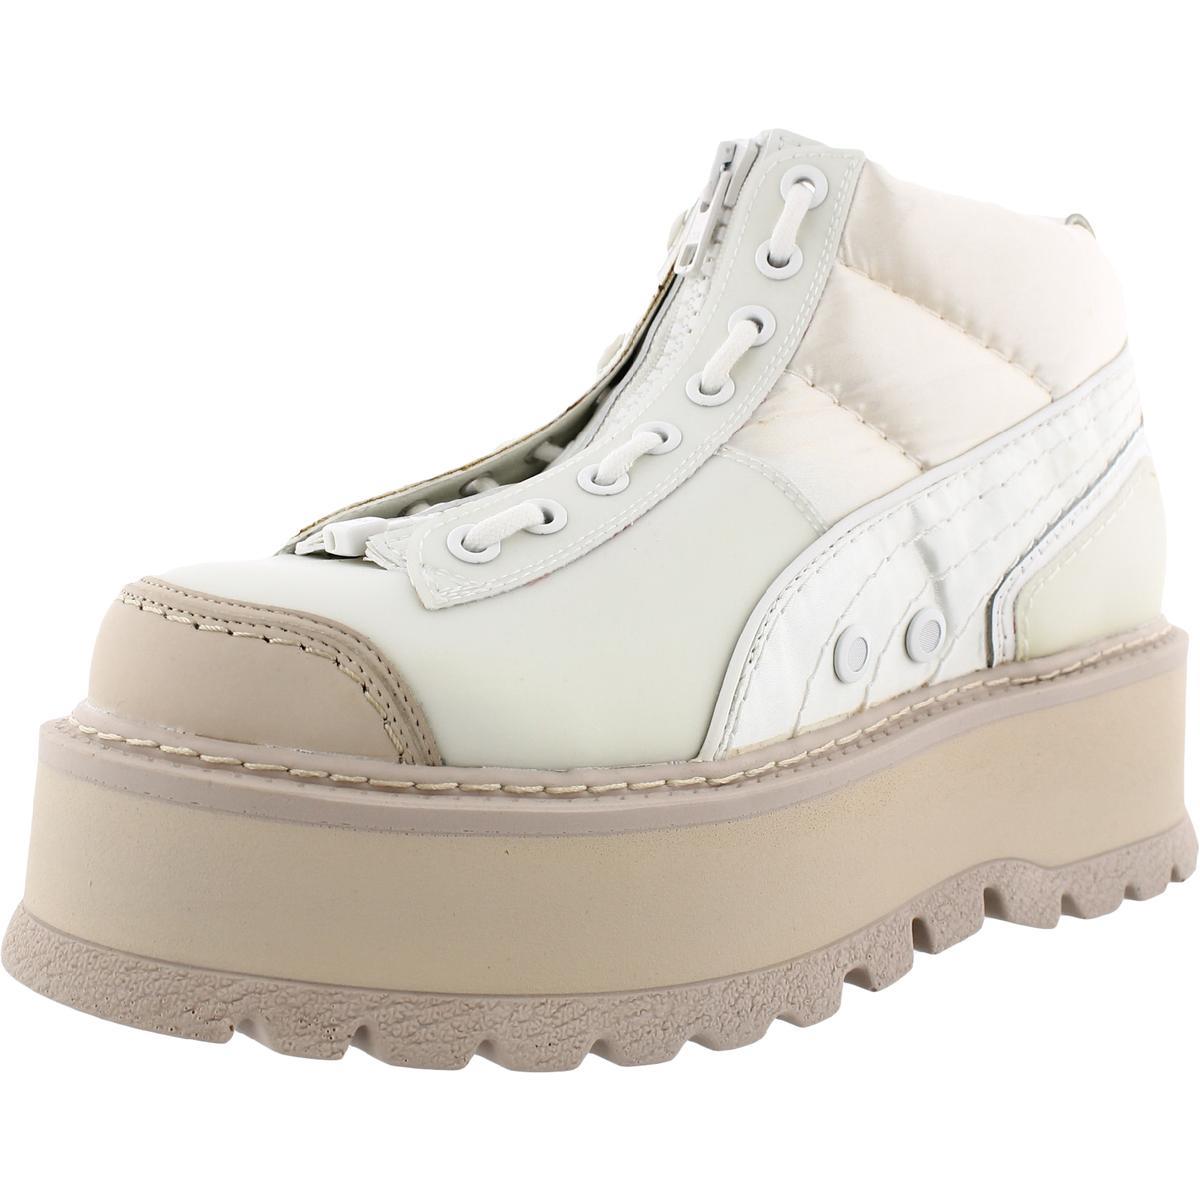 Fenty Puma by Rihanna Womens Sneaker Boot Zip Flatform Shooties Shoes Bhfo 1259 Marshmallow